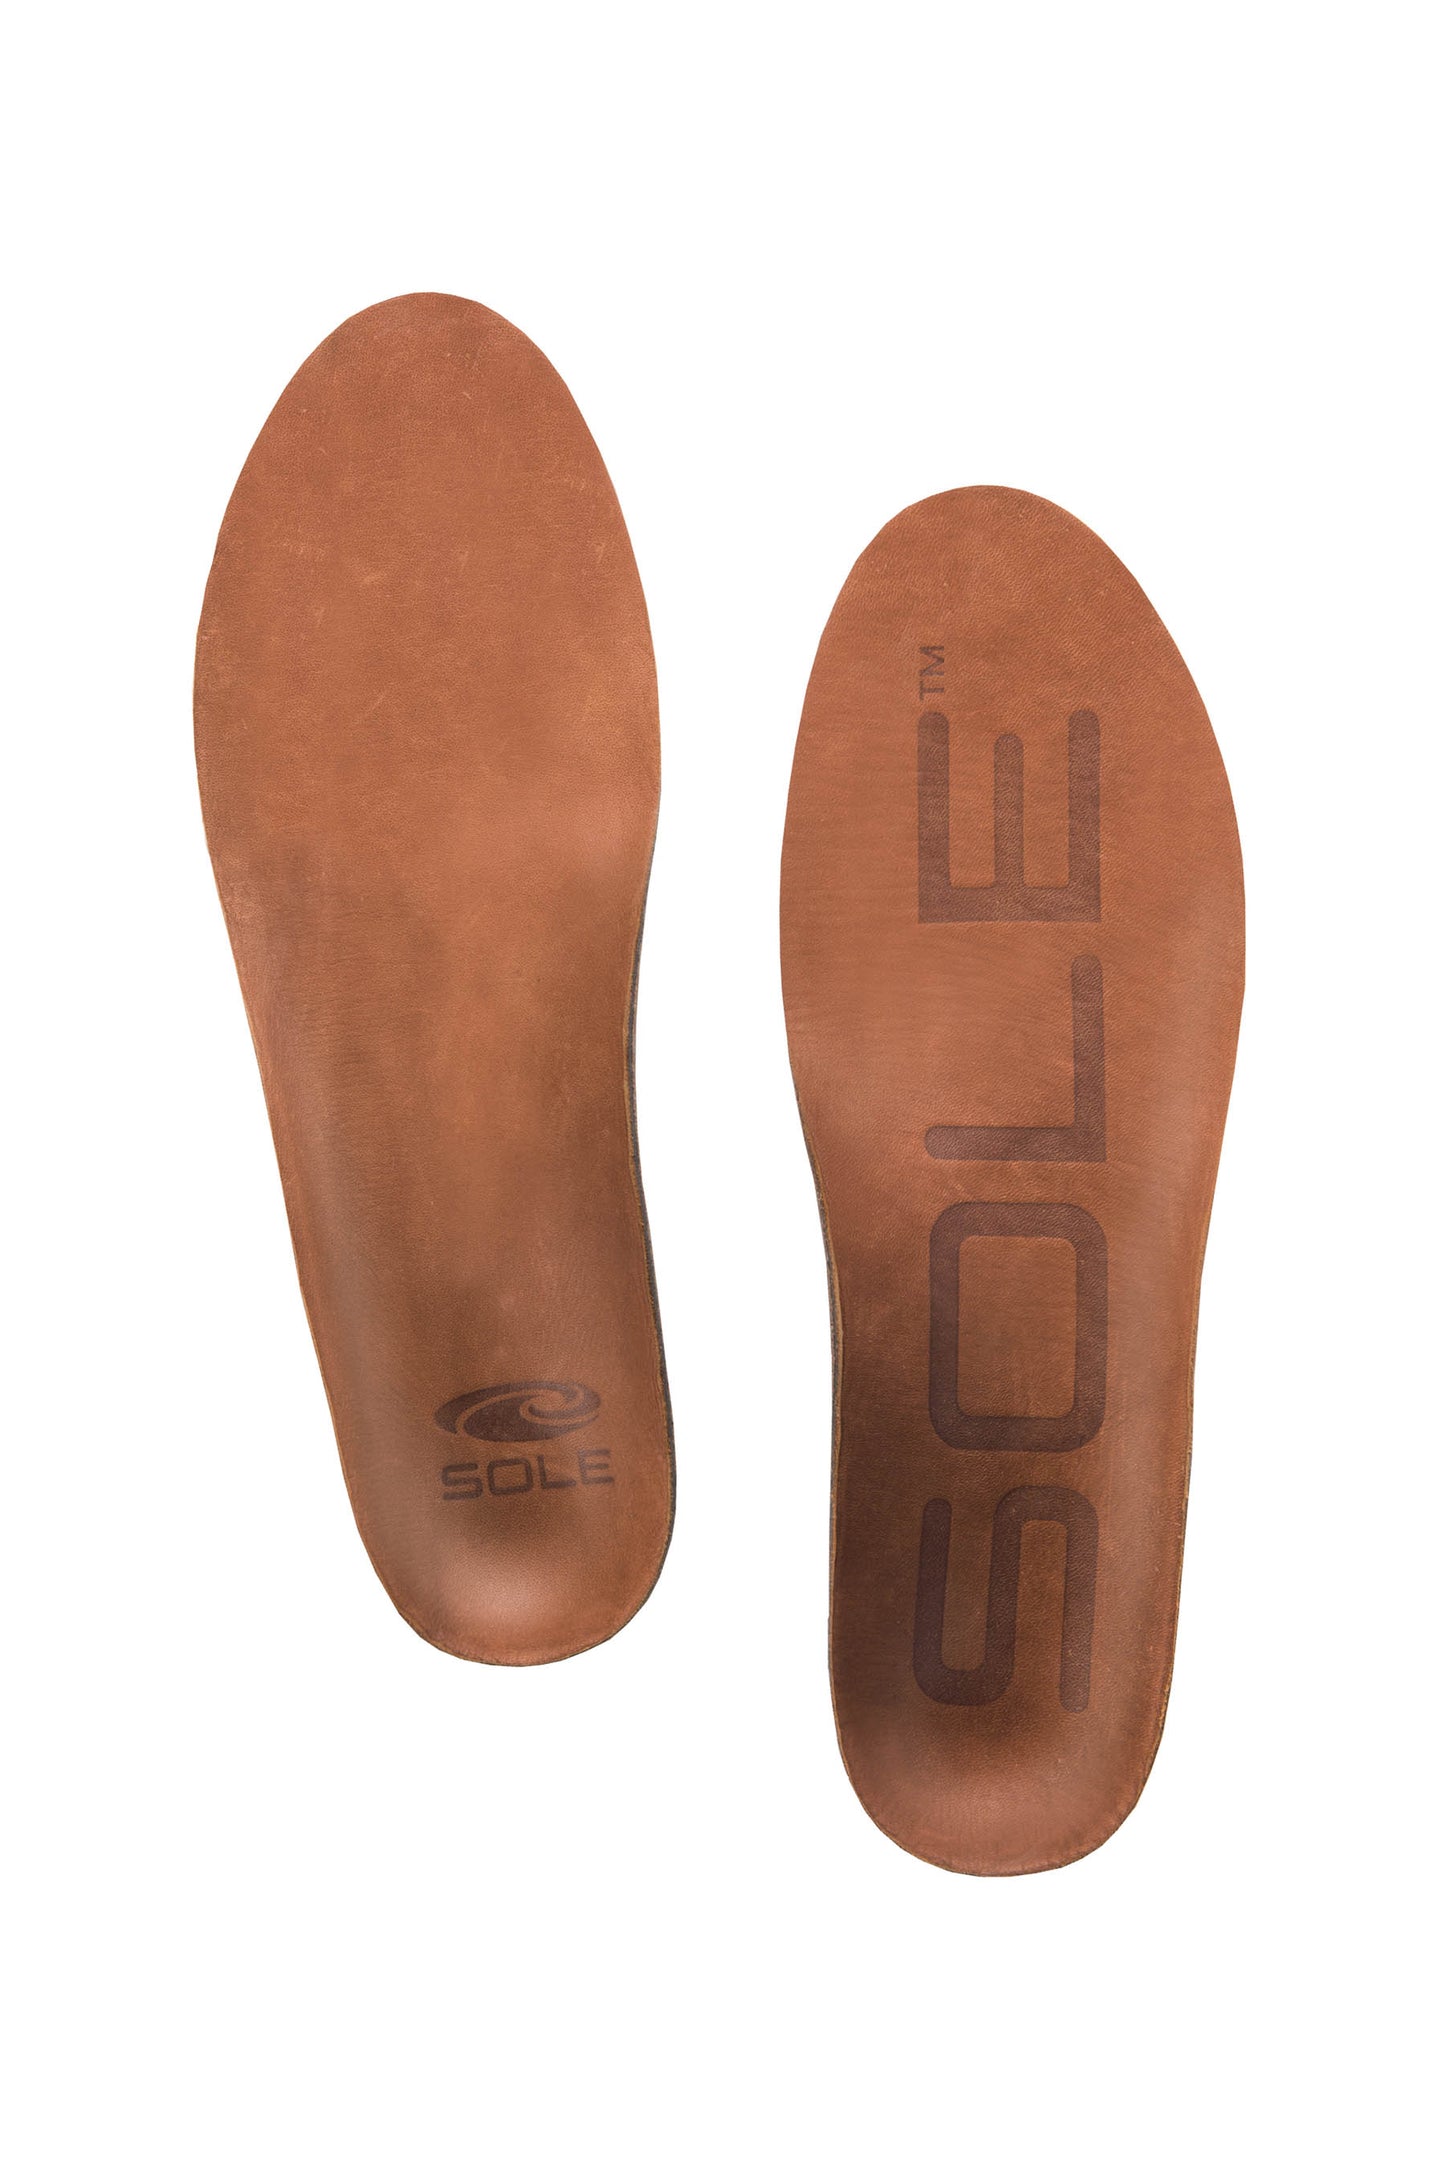 SOLE Casual Footbeds - Medium